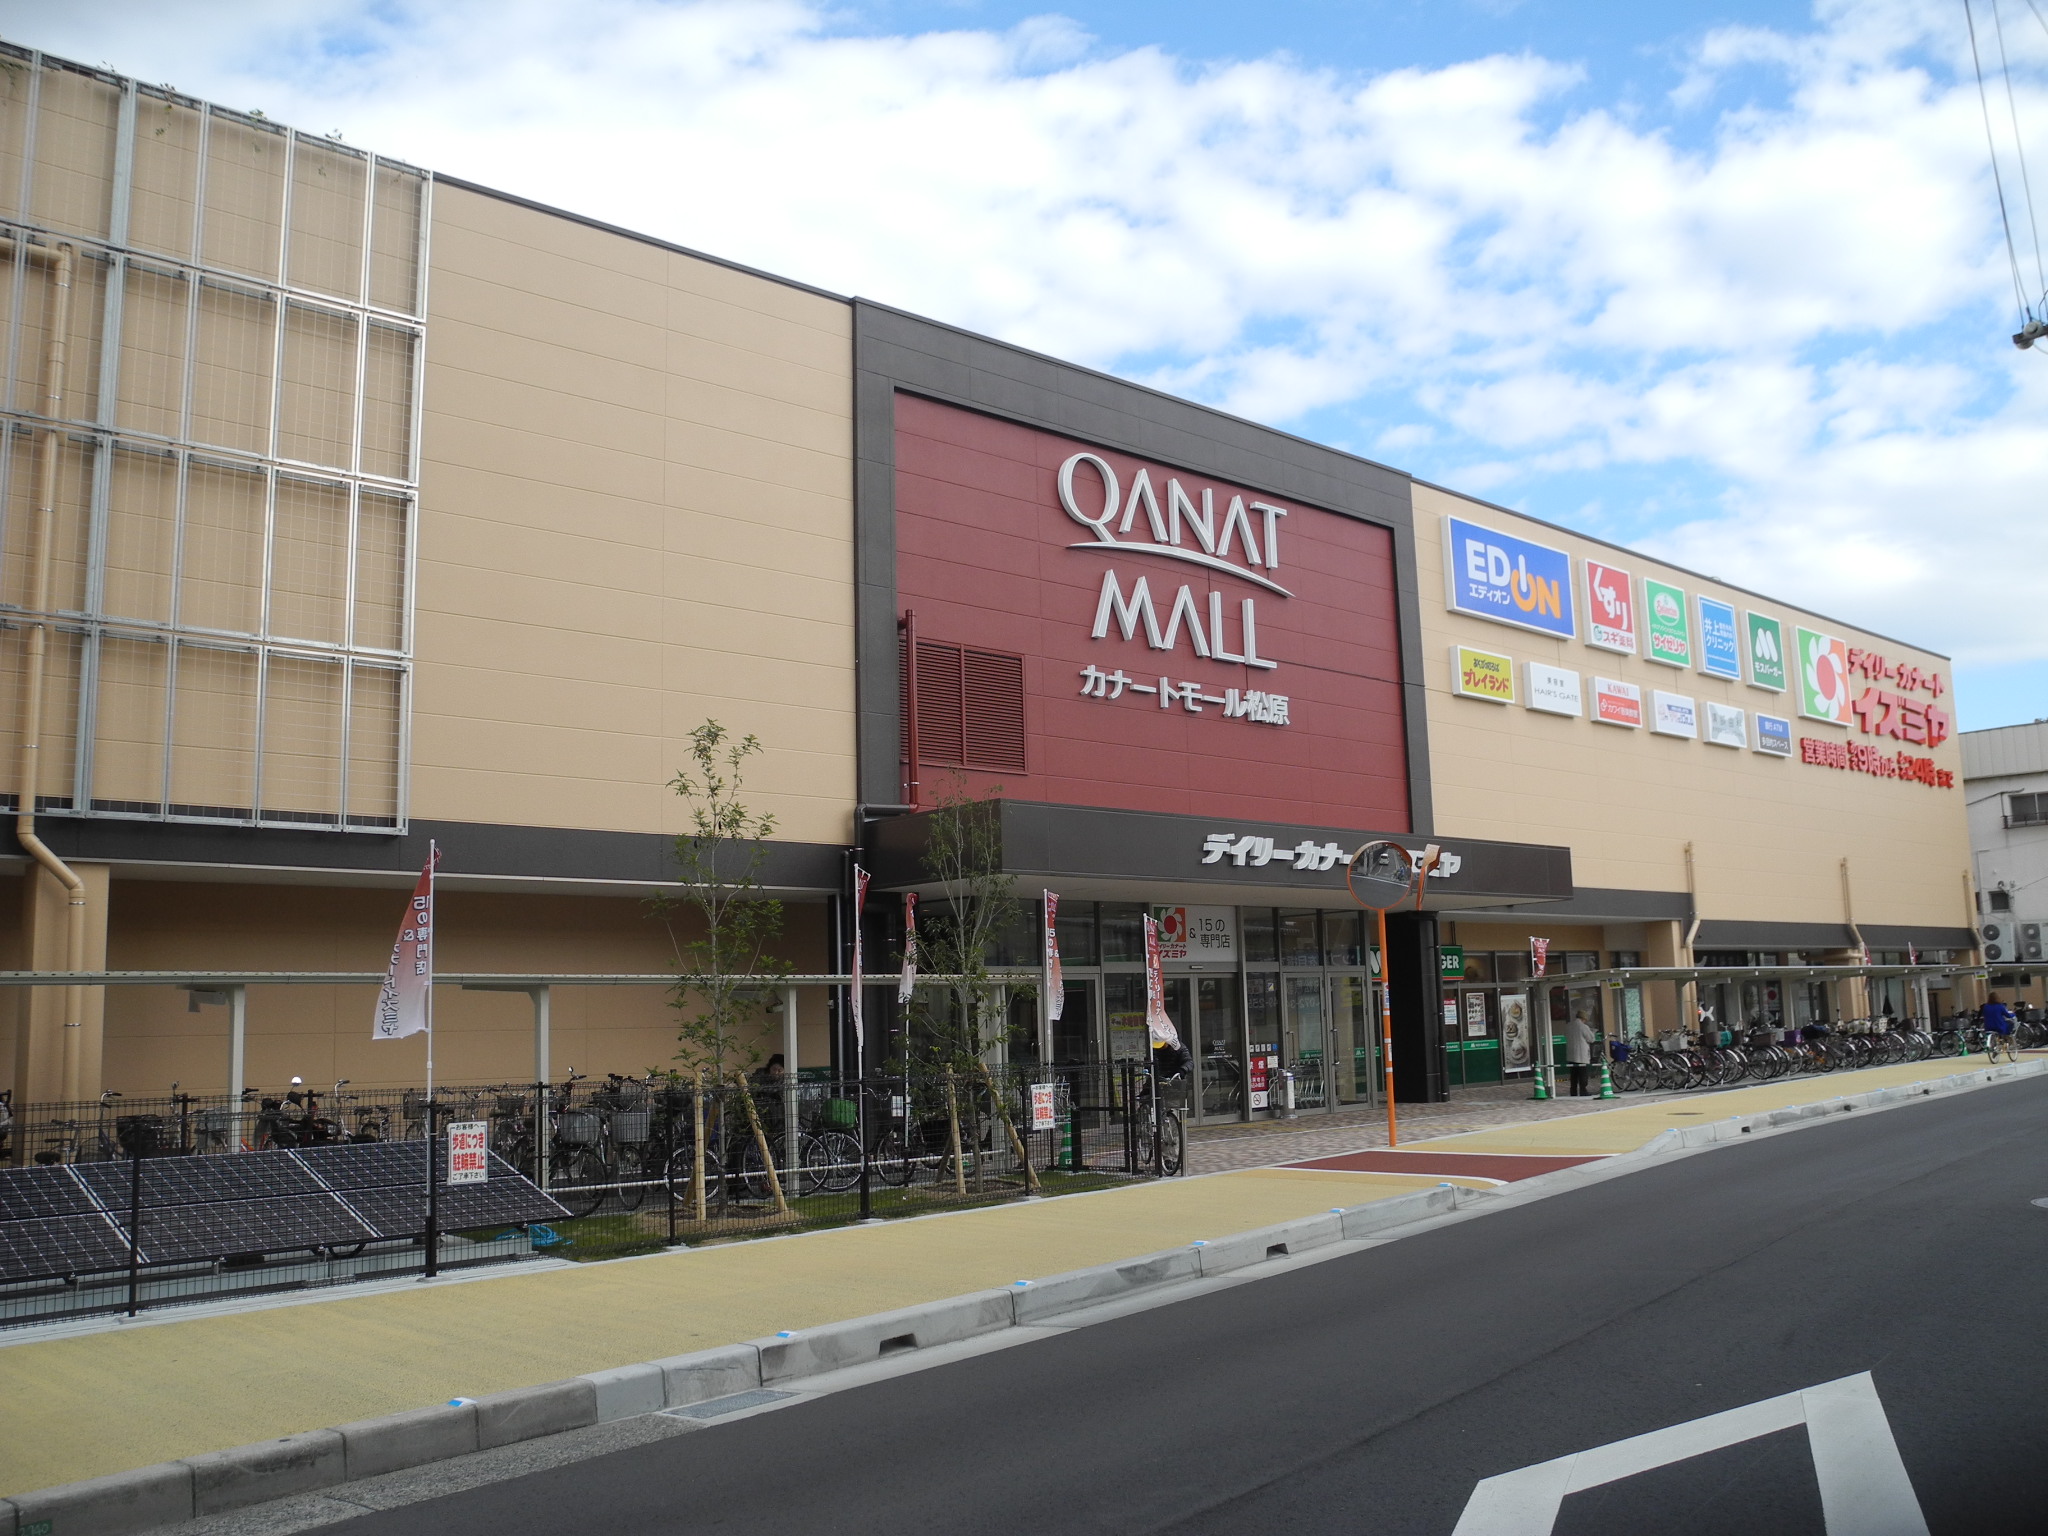 Shopping centre. 795m until qanat Mall Matsubara (shopping center)